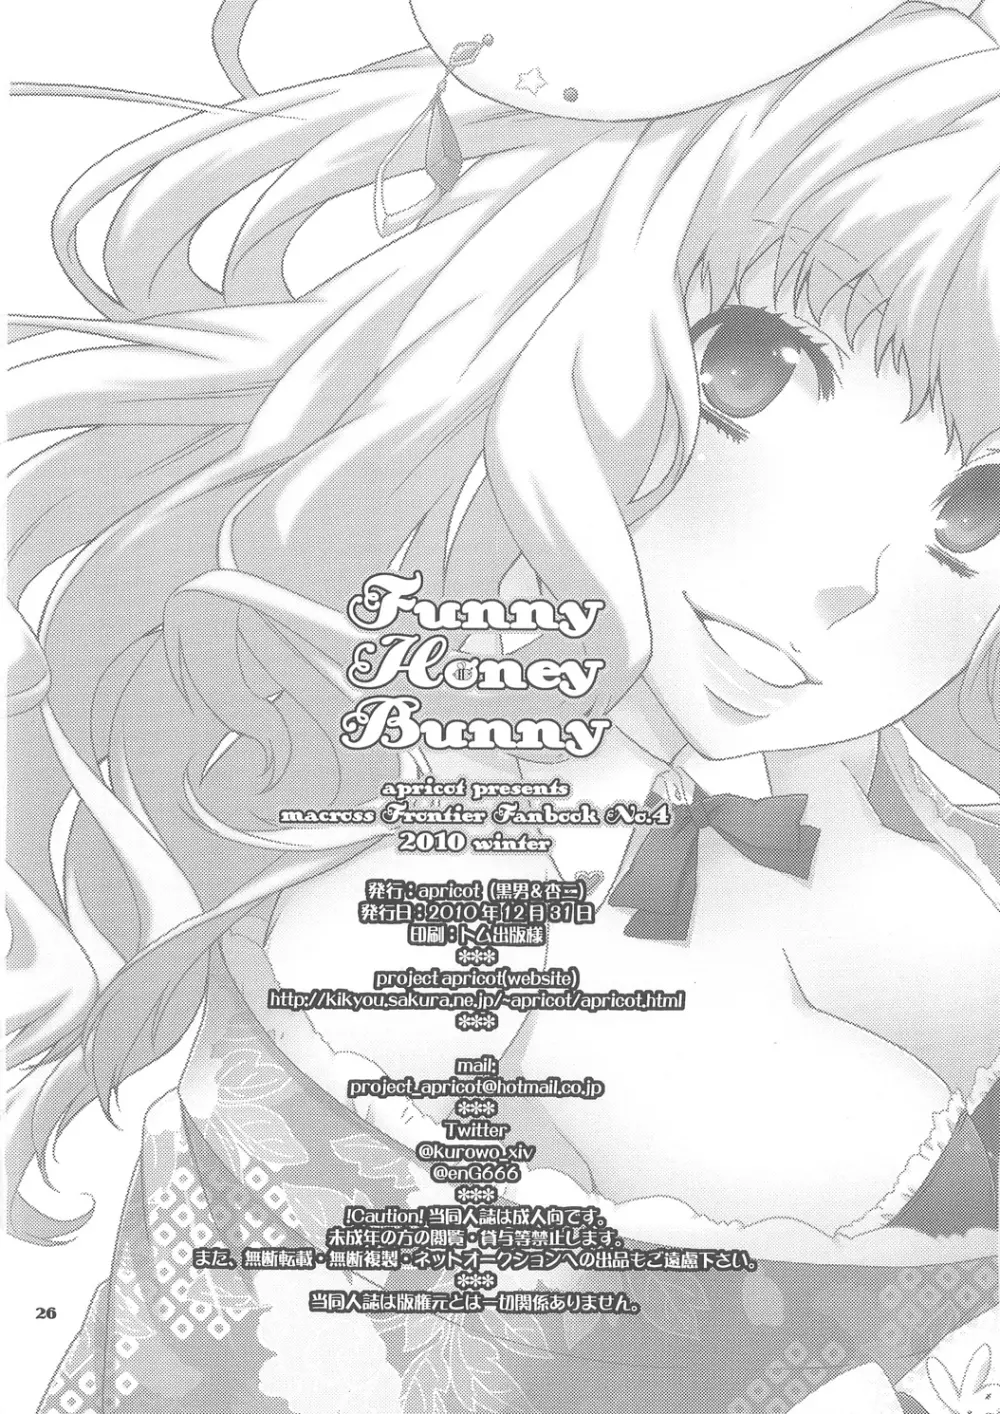 Funny Honey Bunny - page26